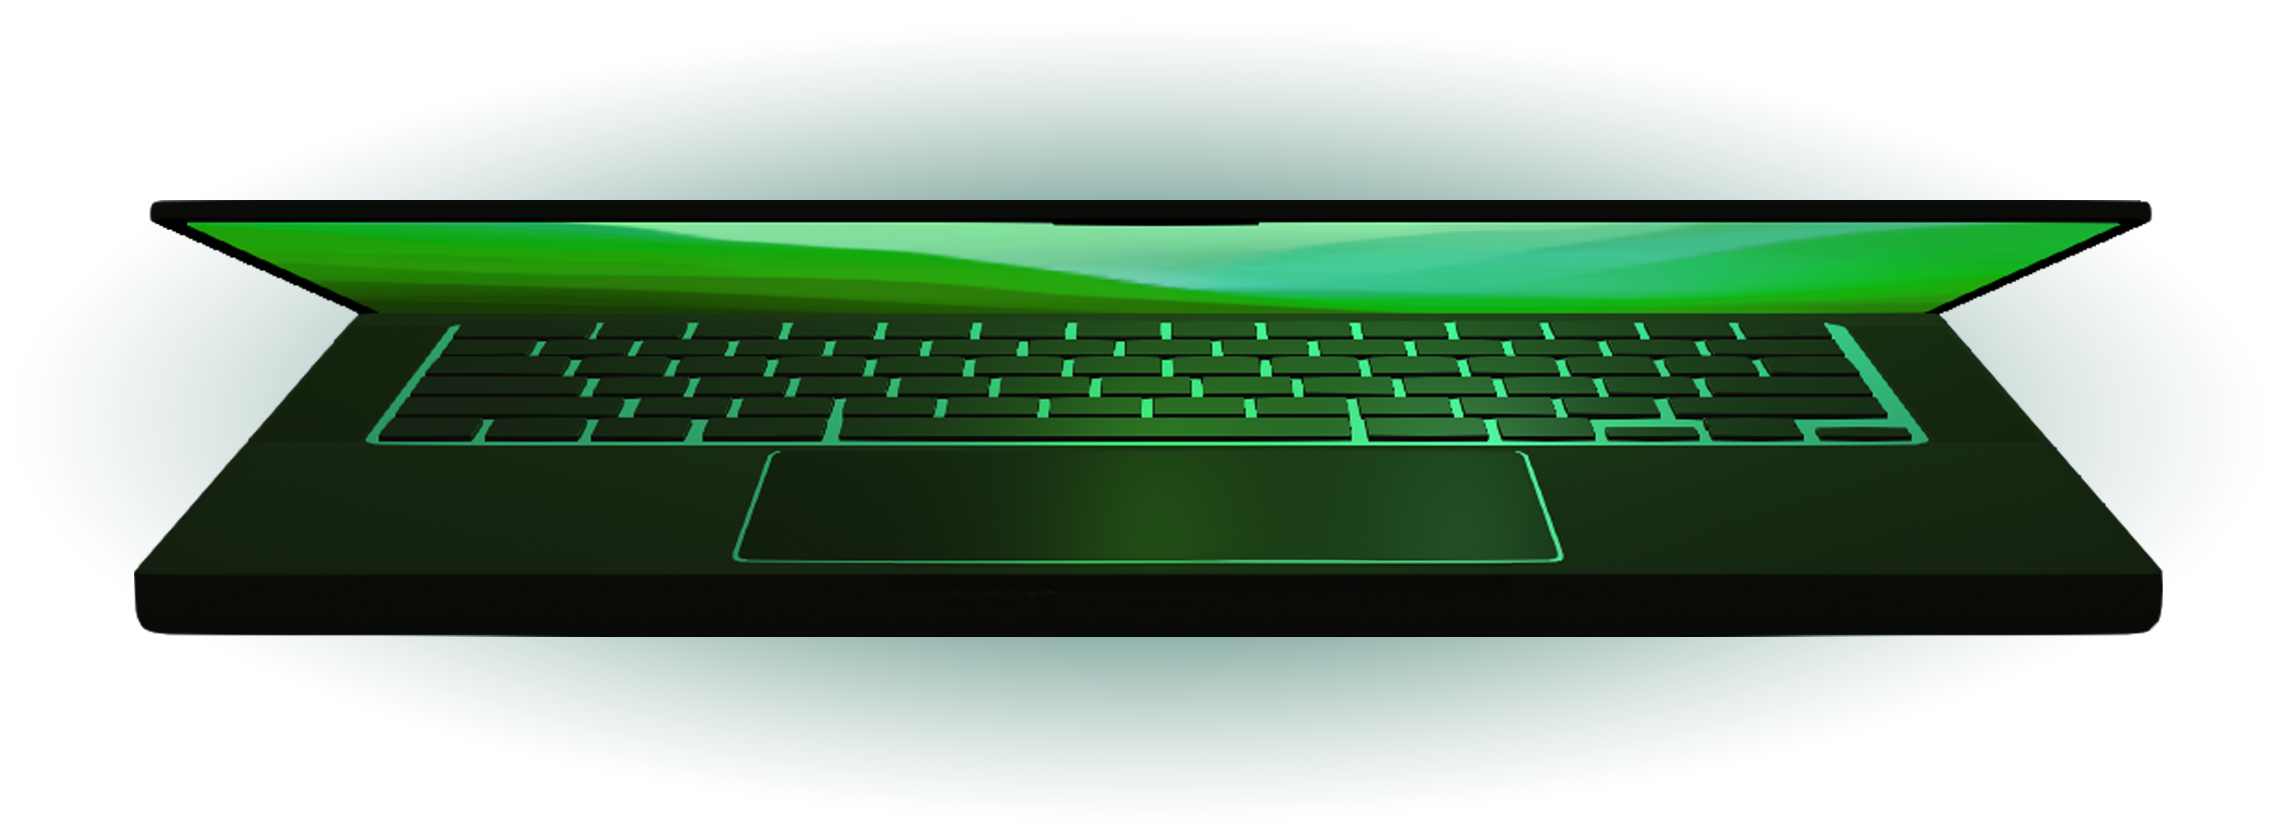 JDC_Download Page_Laptop Glow v2